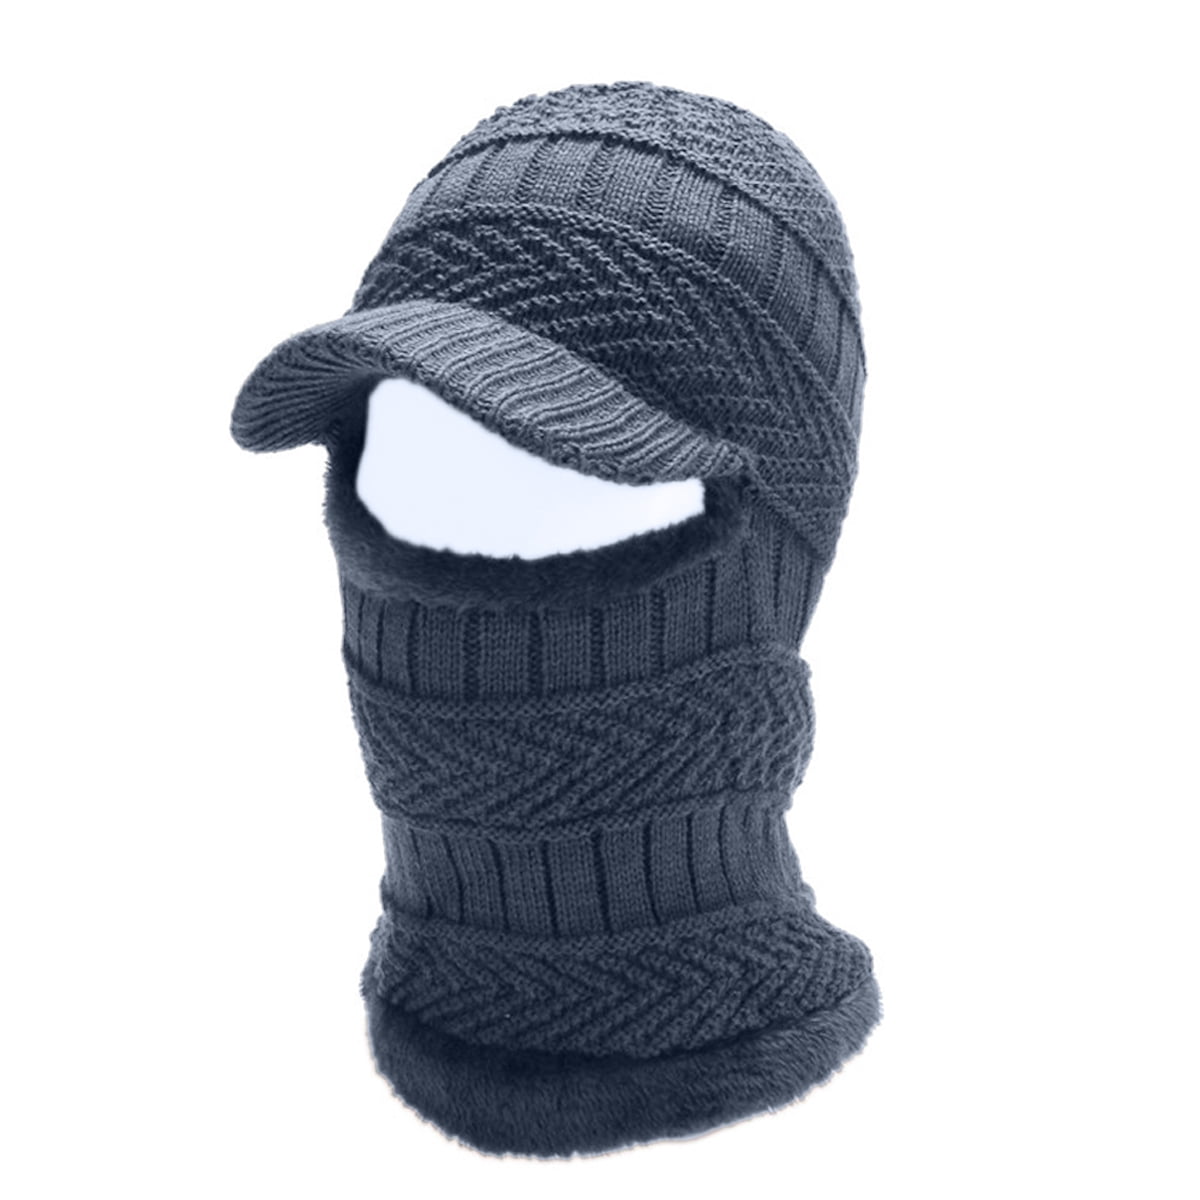 Mask Beanie Winter - Warm Mask Knitted Size Balaclava Face Windproof Ski Universal Cycling Cold Weather,Gray Hat Full